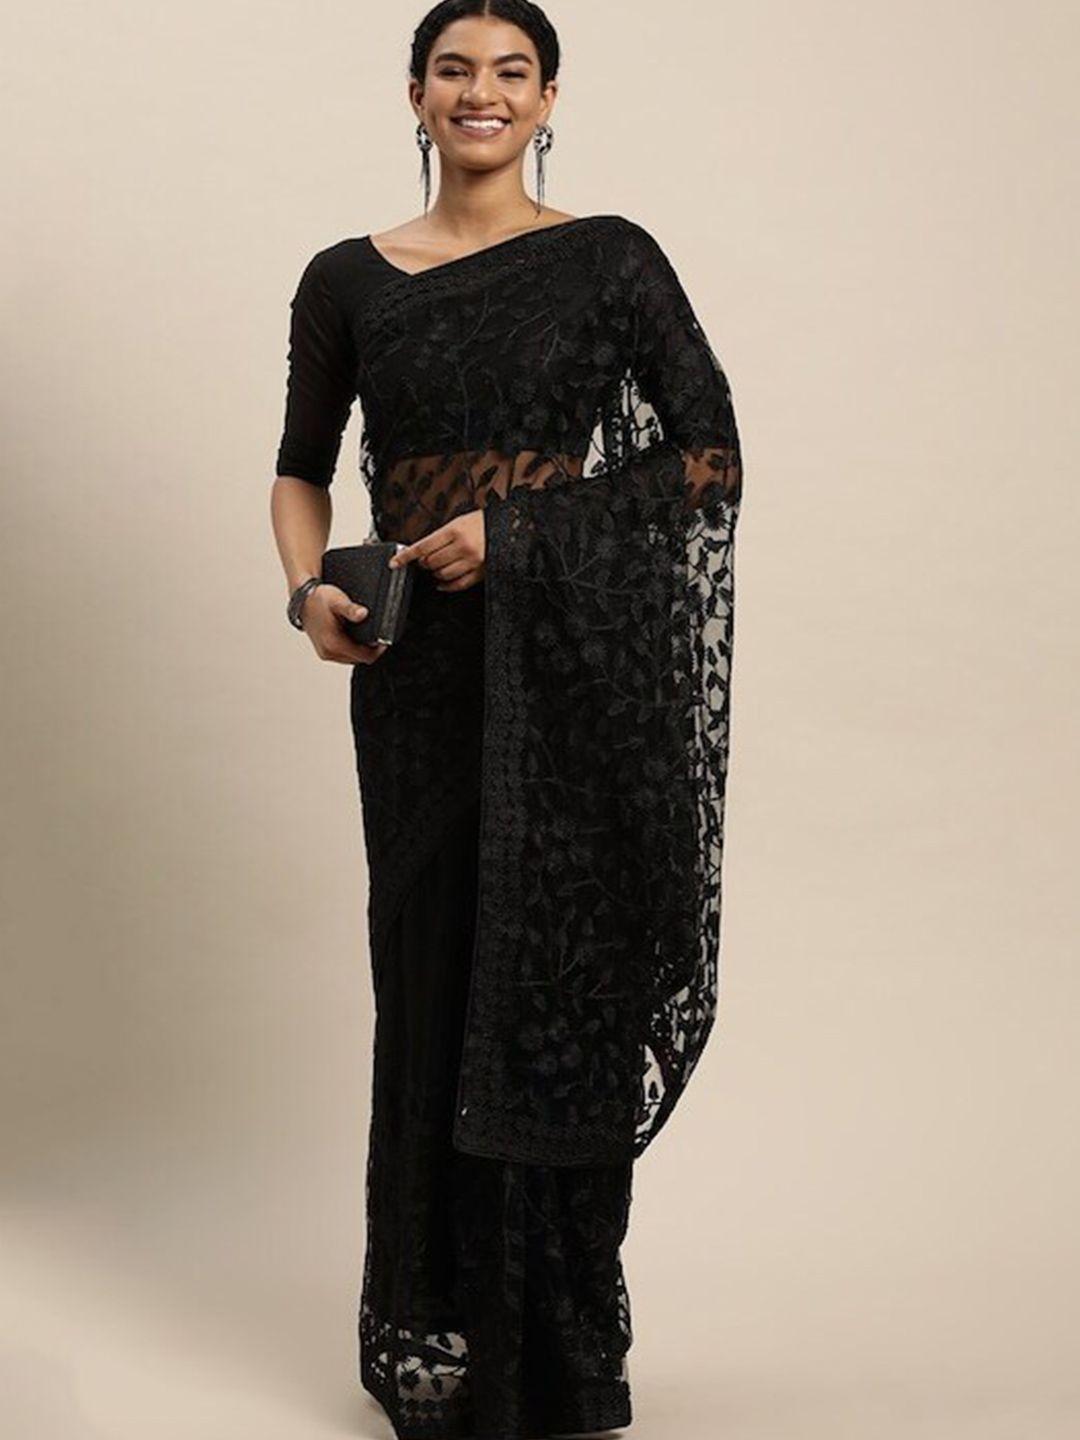 mitera black floral embroidered net saree